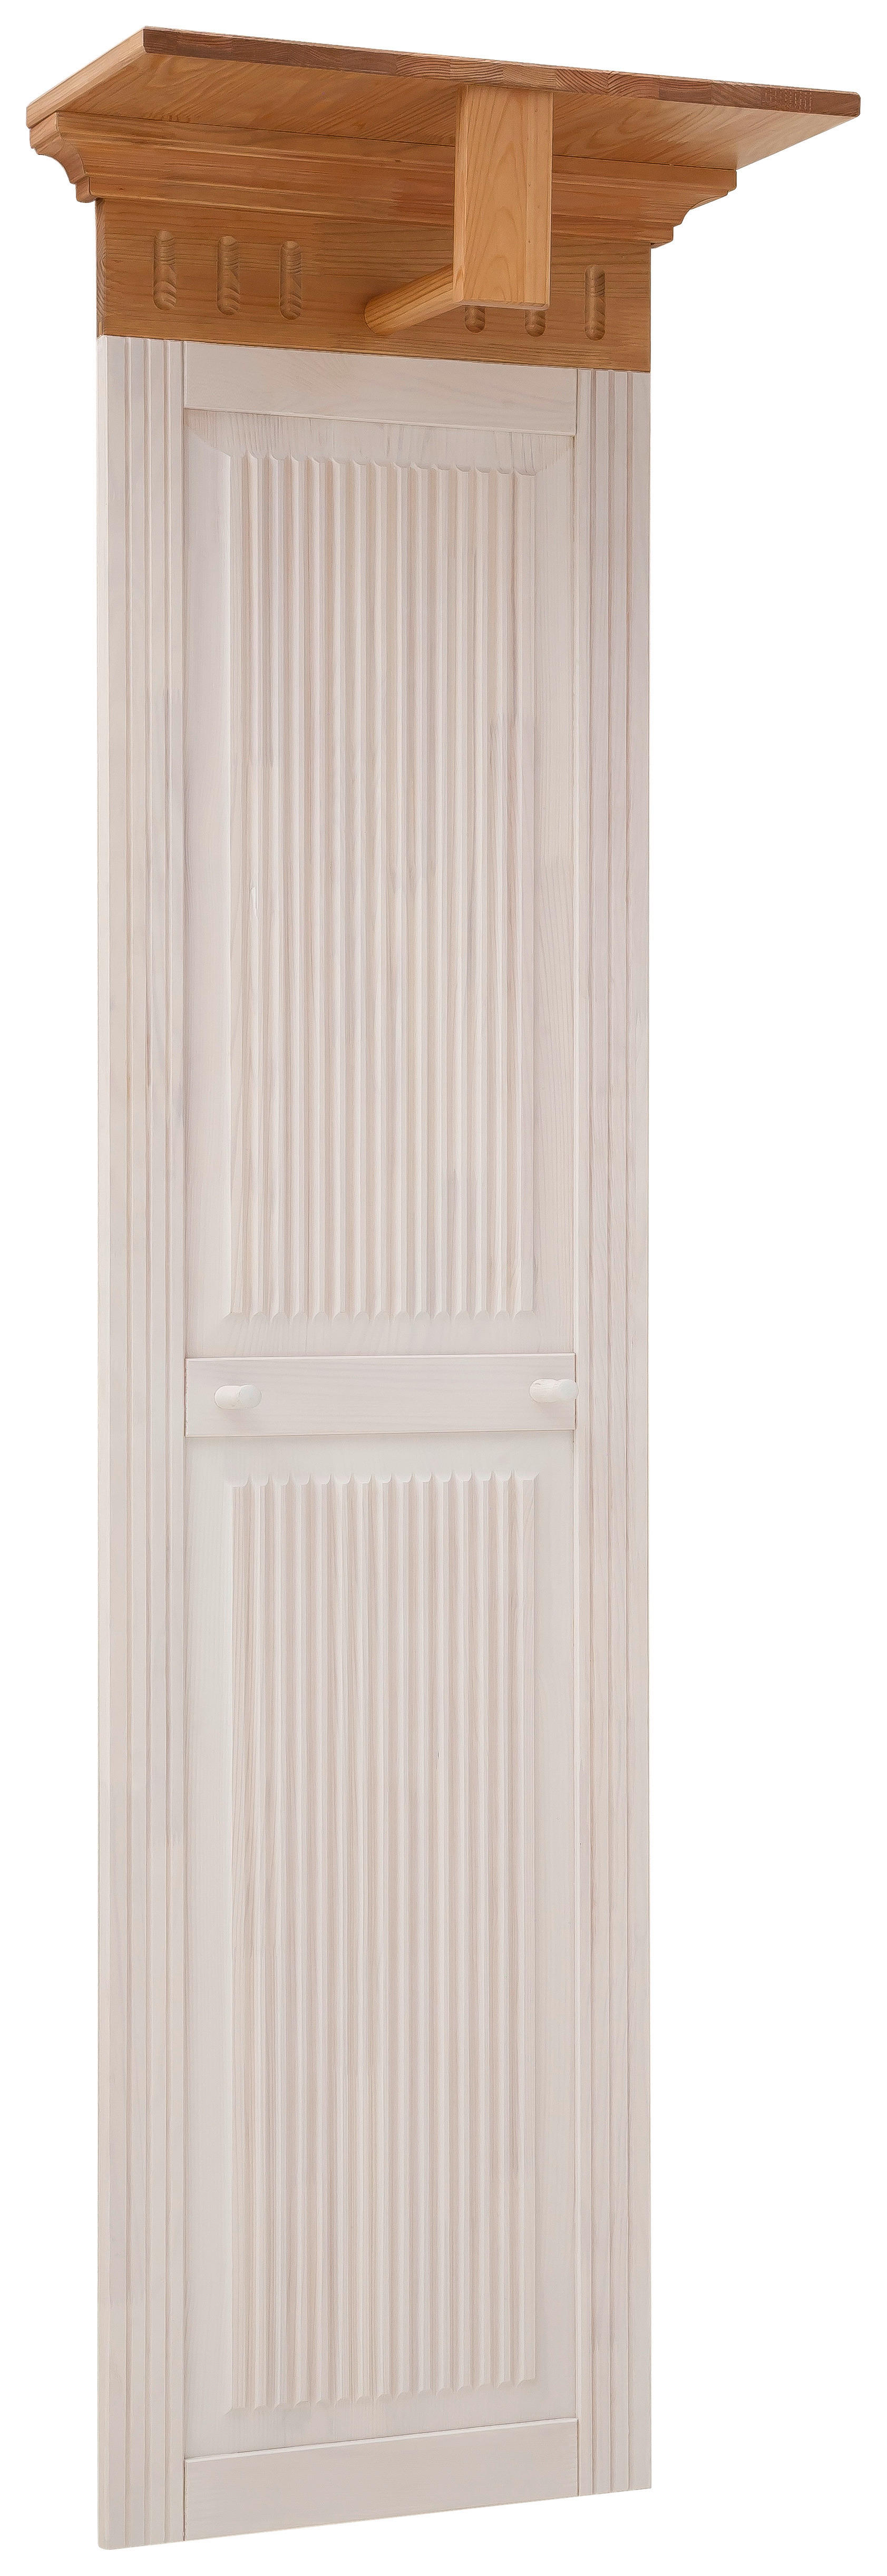 GARDEROBENPANEEL Kiefer massiv Weiß, Kieferfarben  - Weiß/Kieferfarben, LIFESTYLE, Holz (53/183/26cm) - Carryhome